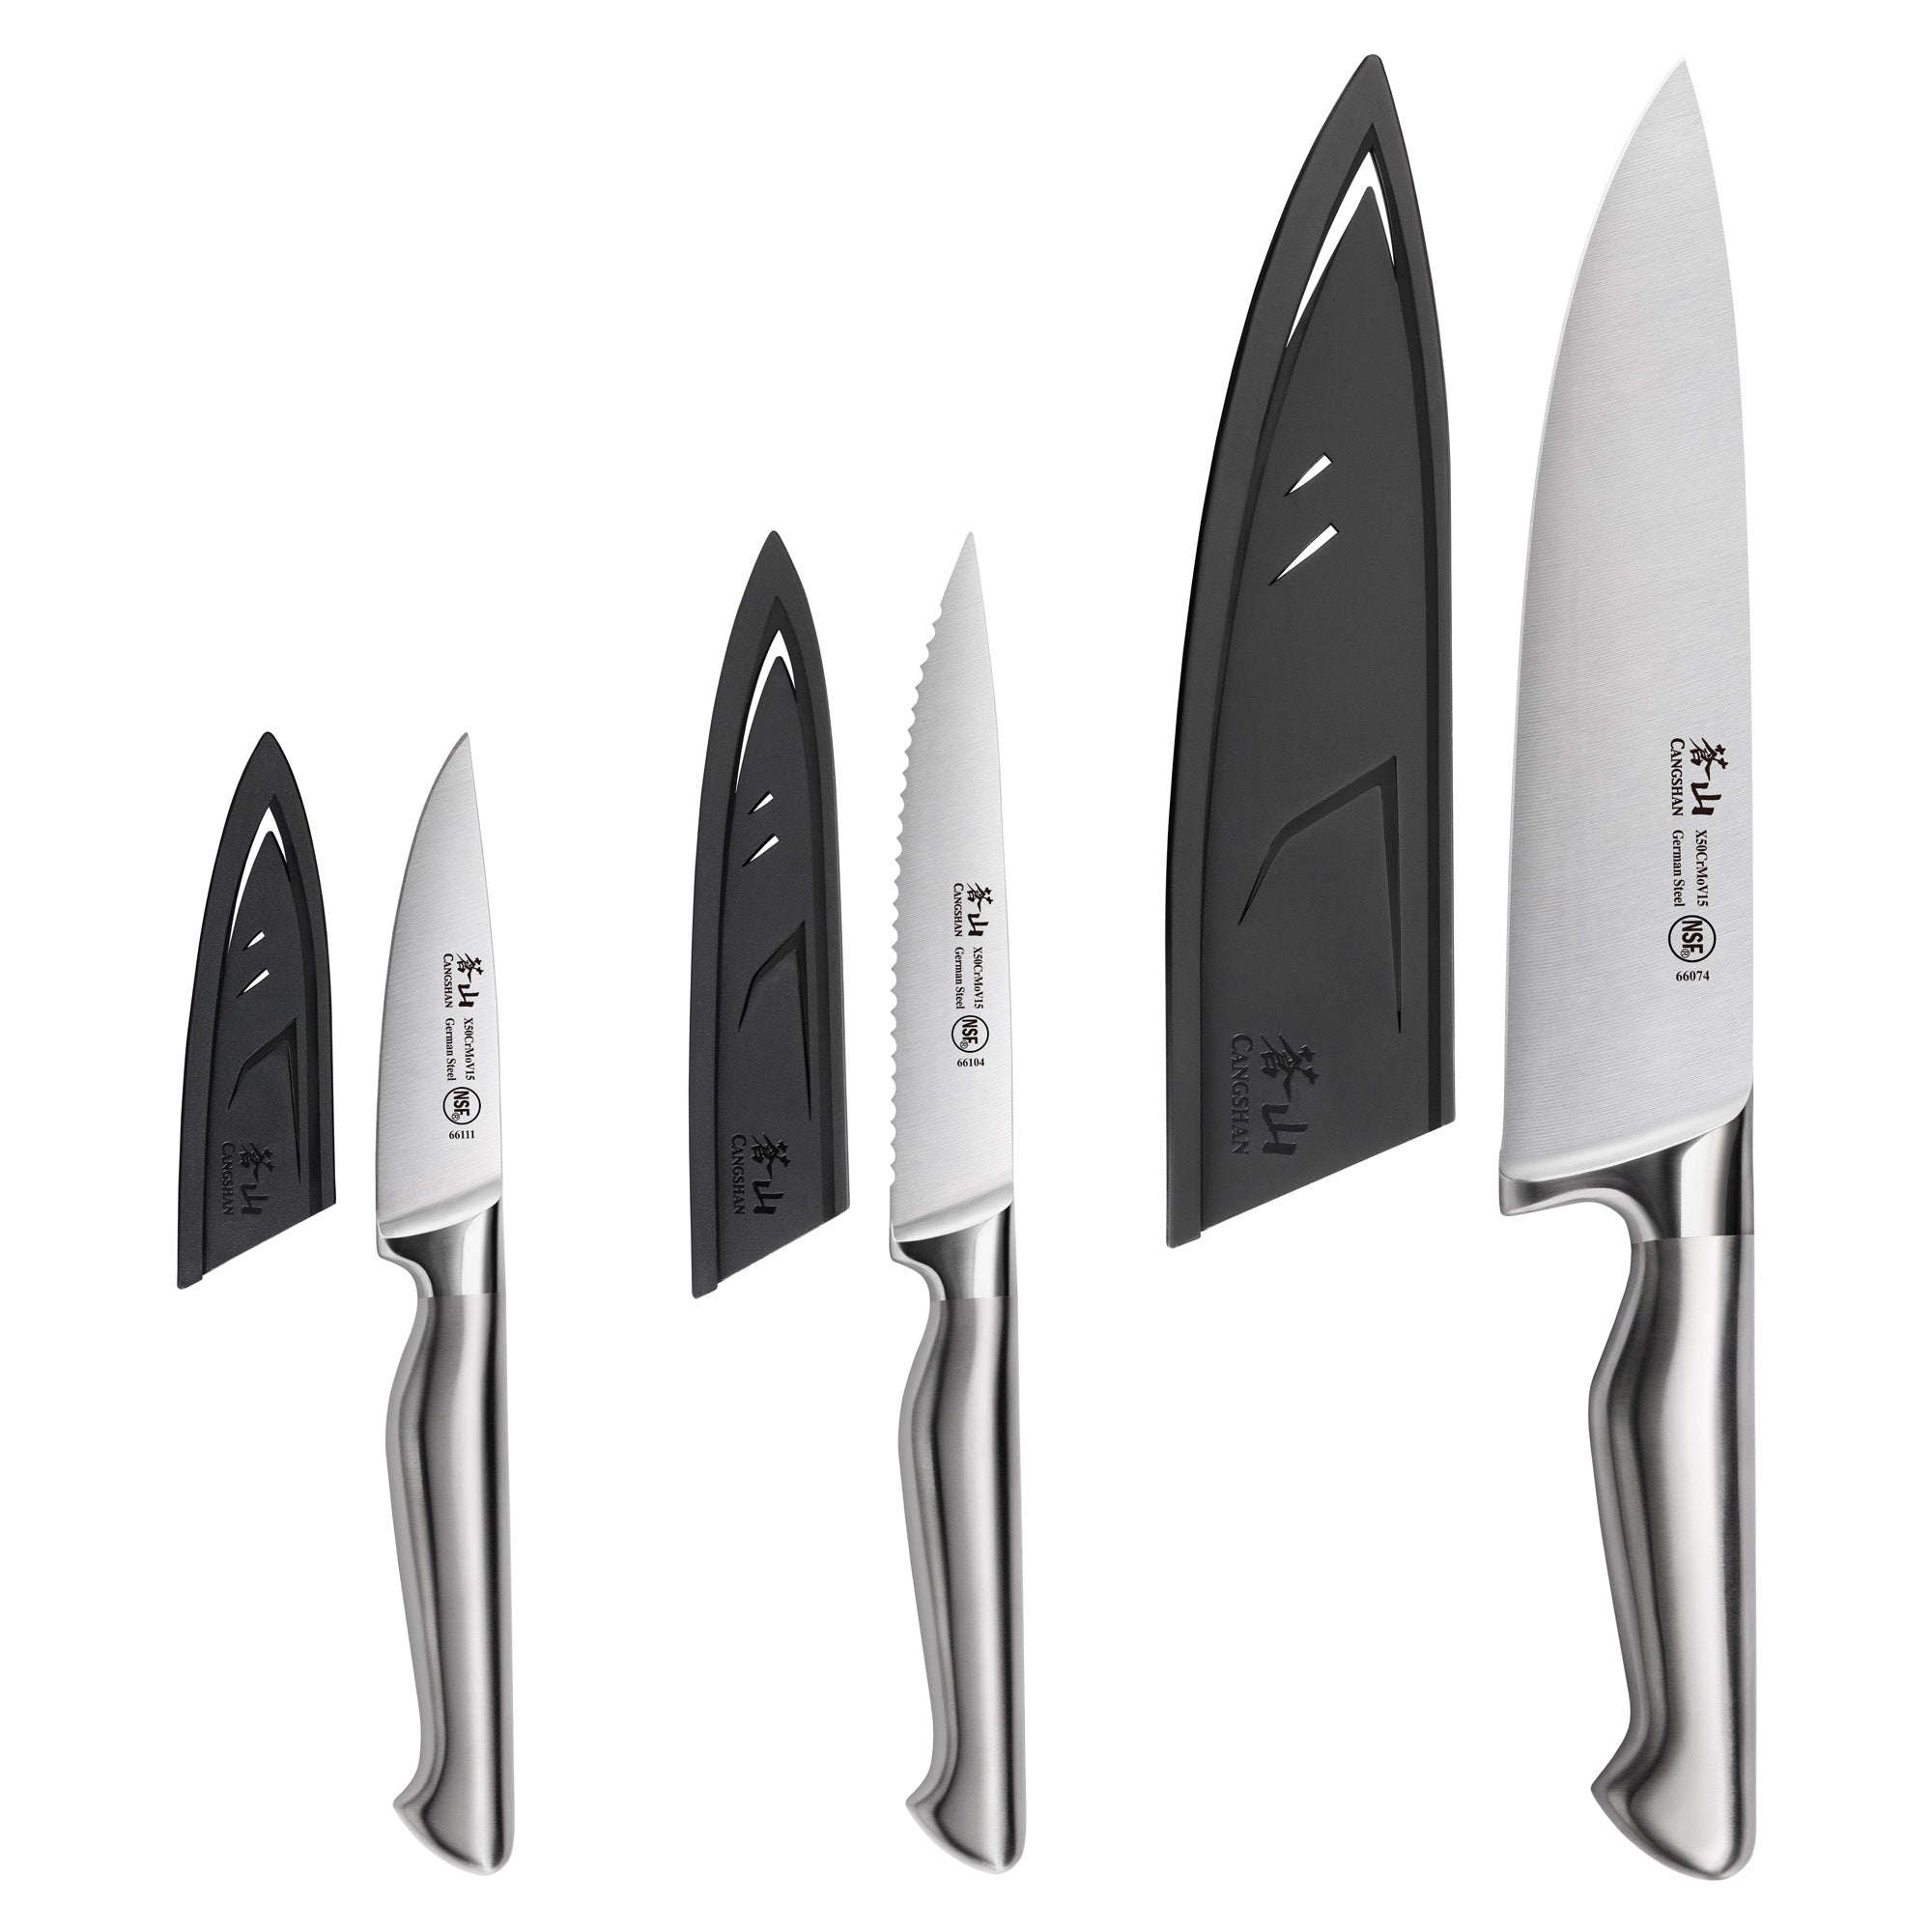 Cangshan Elbert Series German Steel Forged Cleaver Knife Block Sets, Acacia (3-Piece, White)